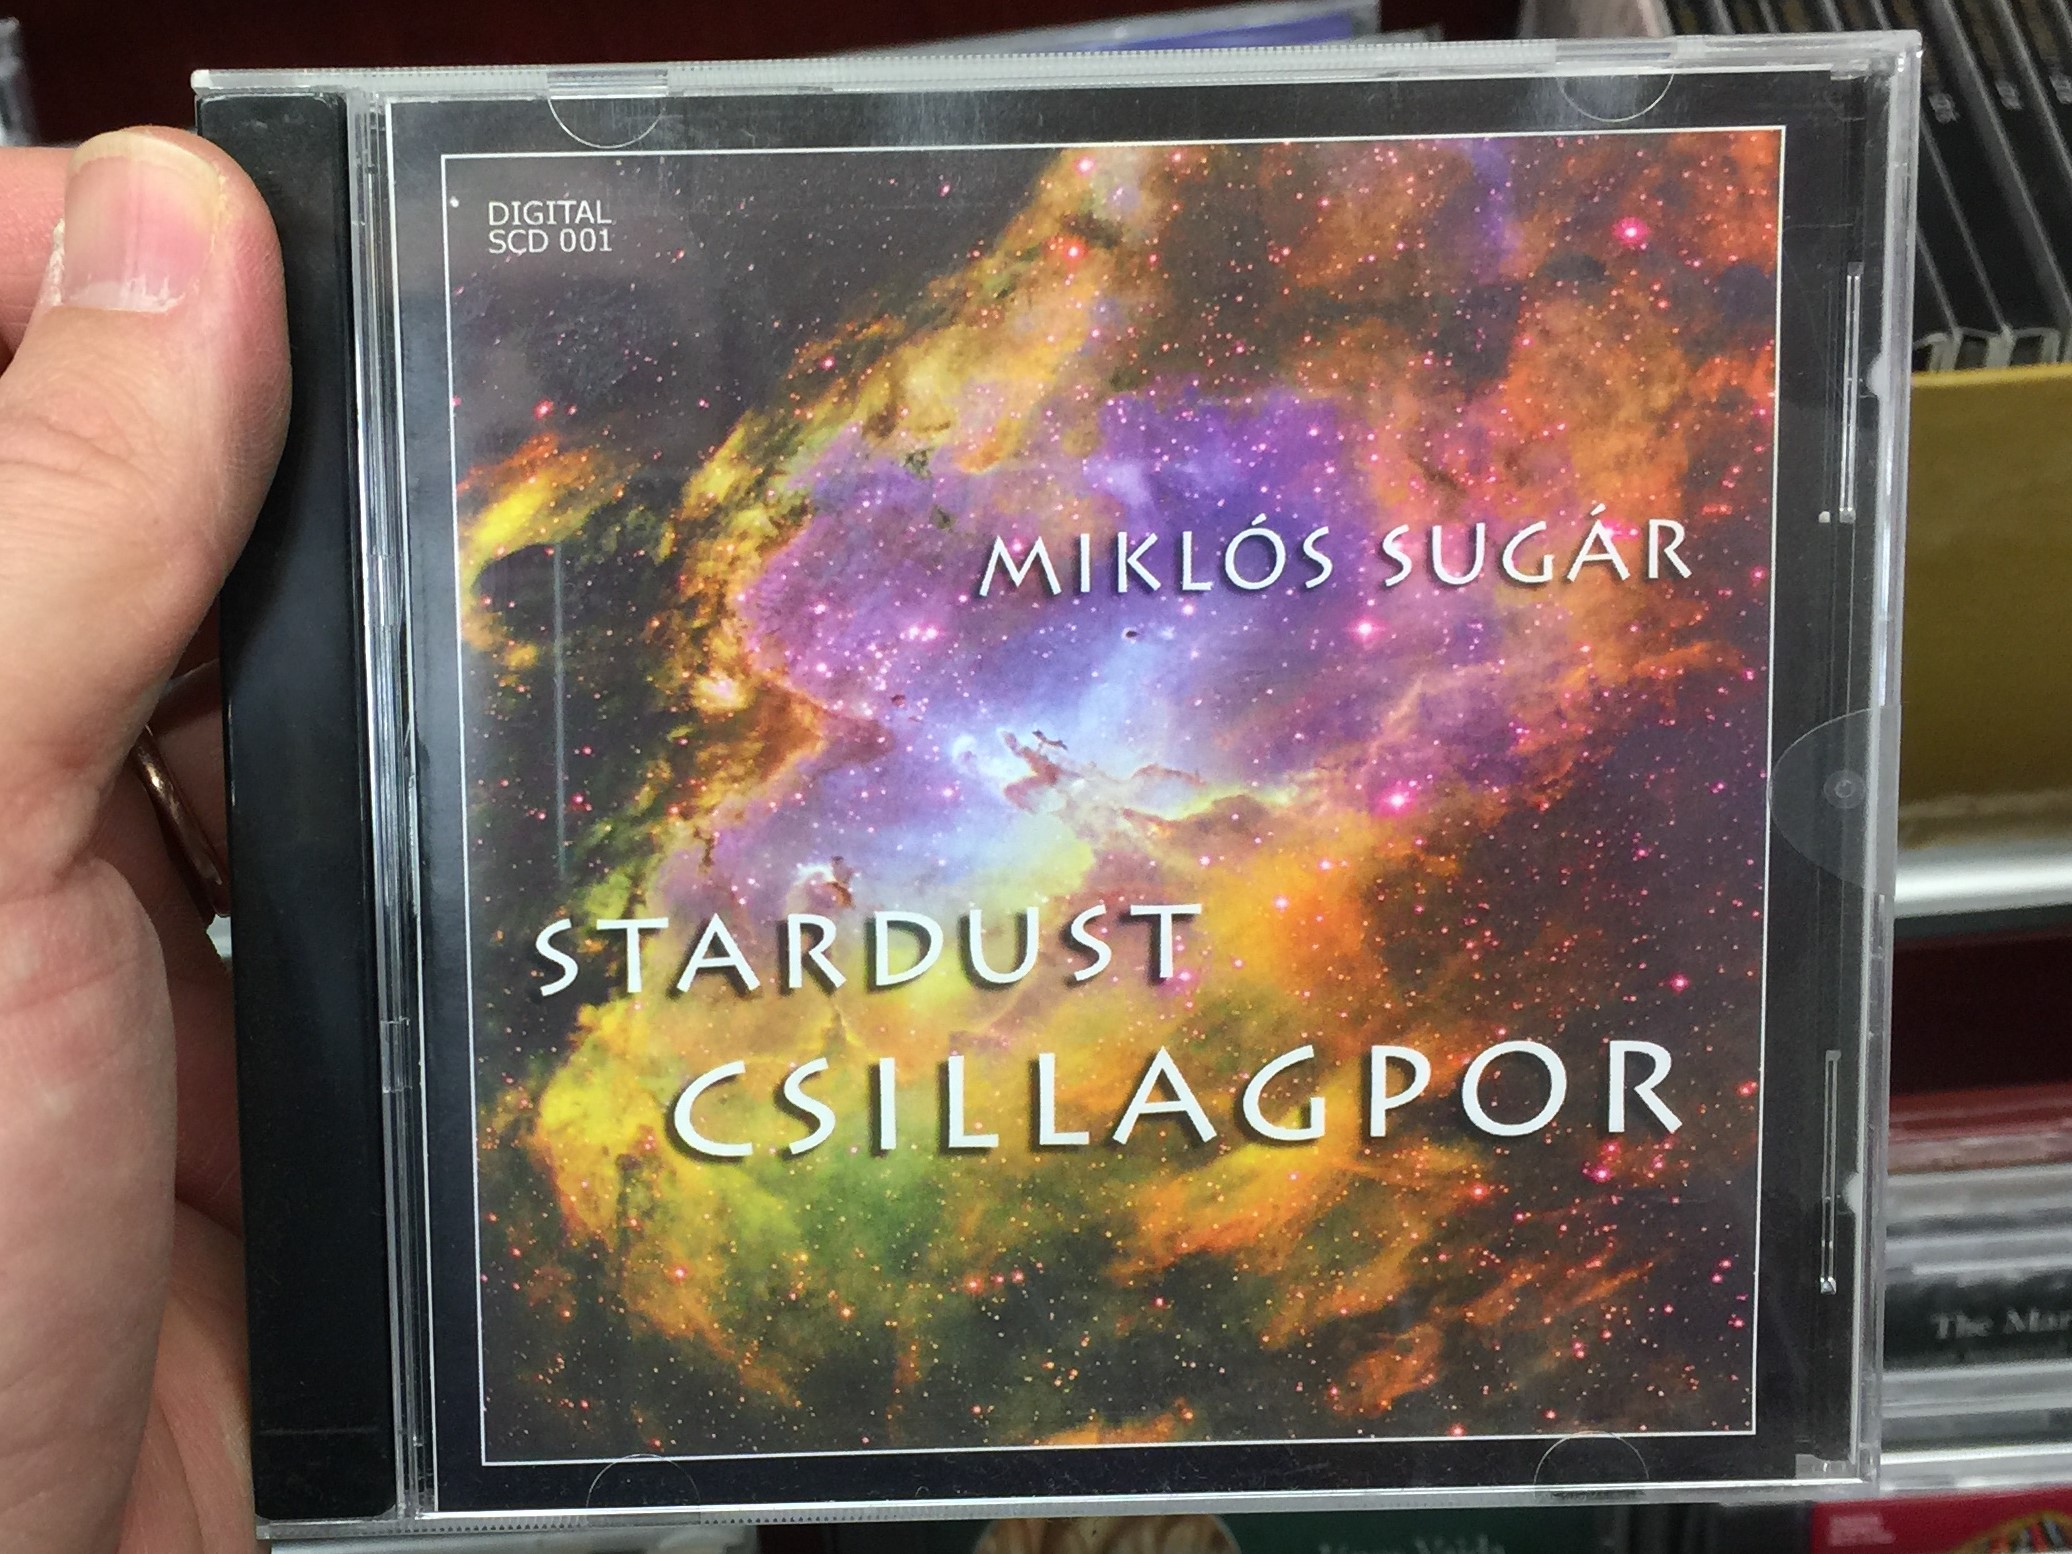 miklos-sugar-stardust-csillagpor-hungary-sugi-kulturalis-bt.-audio-cd-2013-stereo-scd-001-1-.jpg